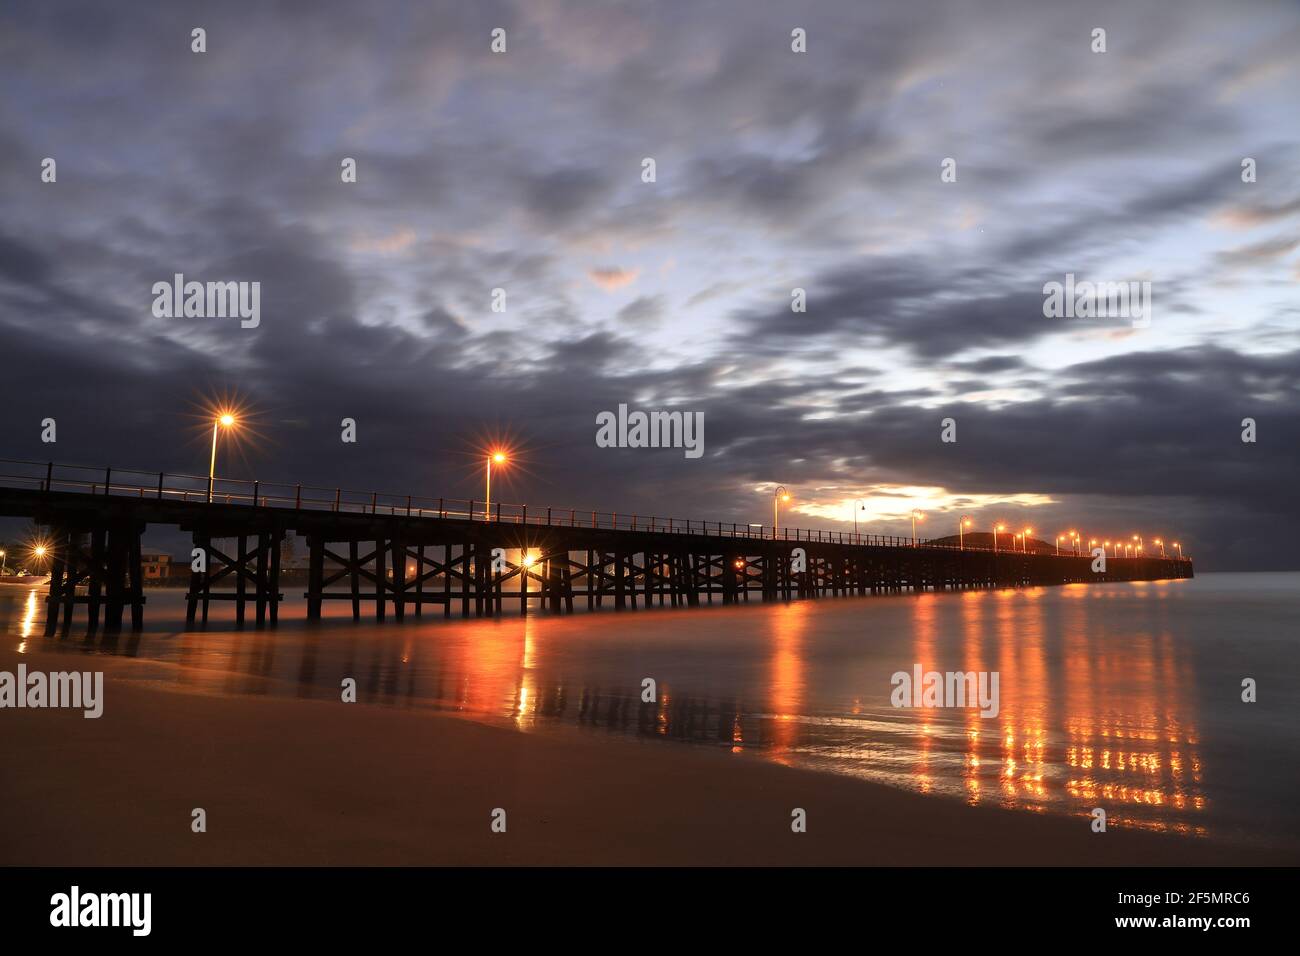 Coffs Harbour Jetty at sunrise, NSW, Australia. Stock Photo